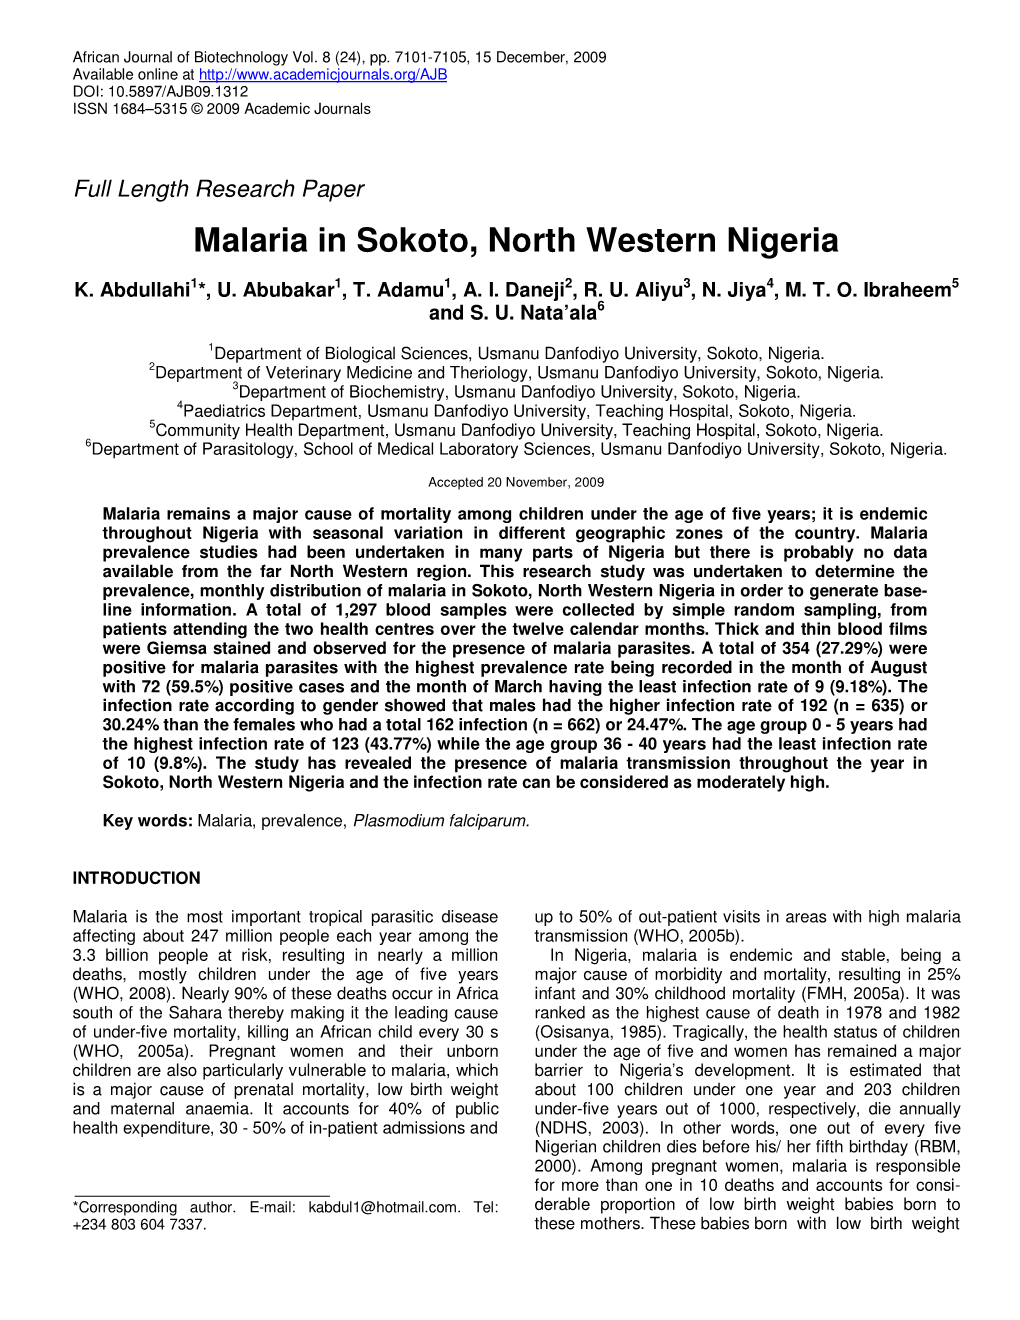 Malaria in Sokoto, North Western Nigeria